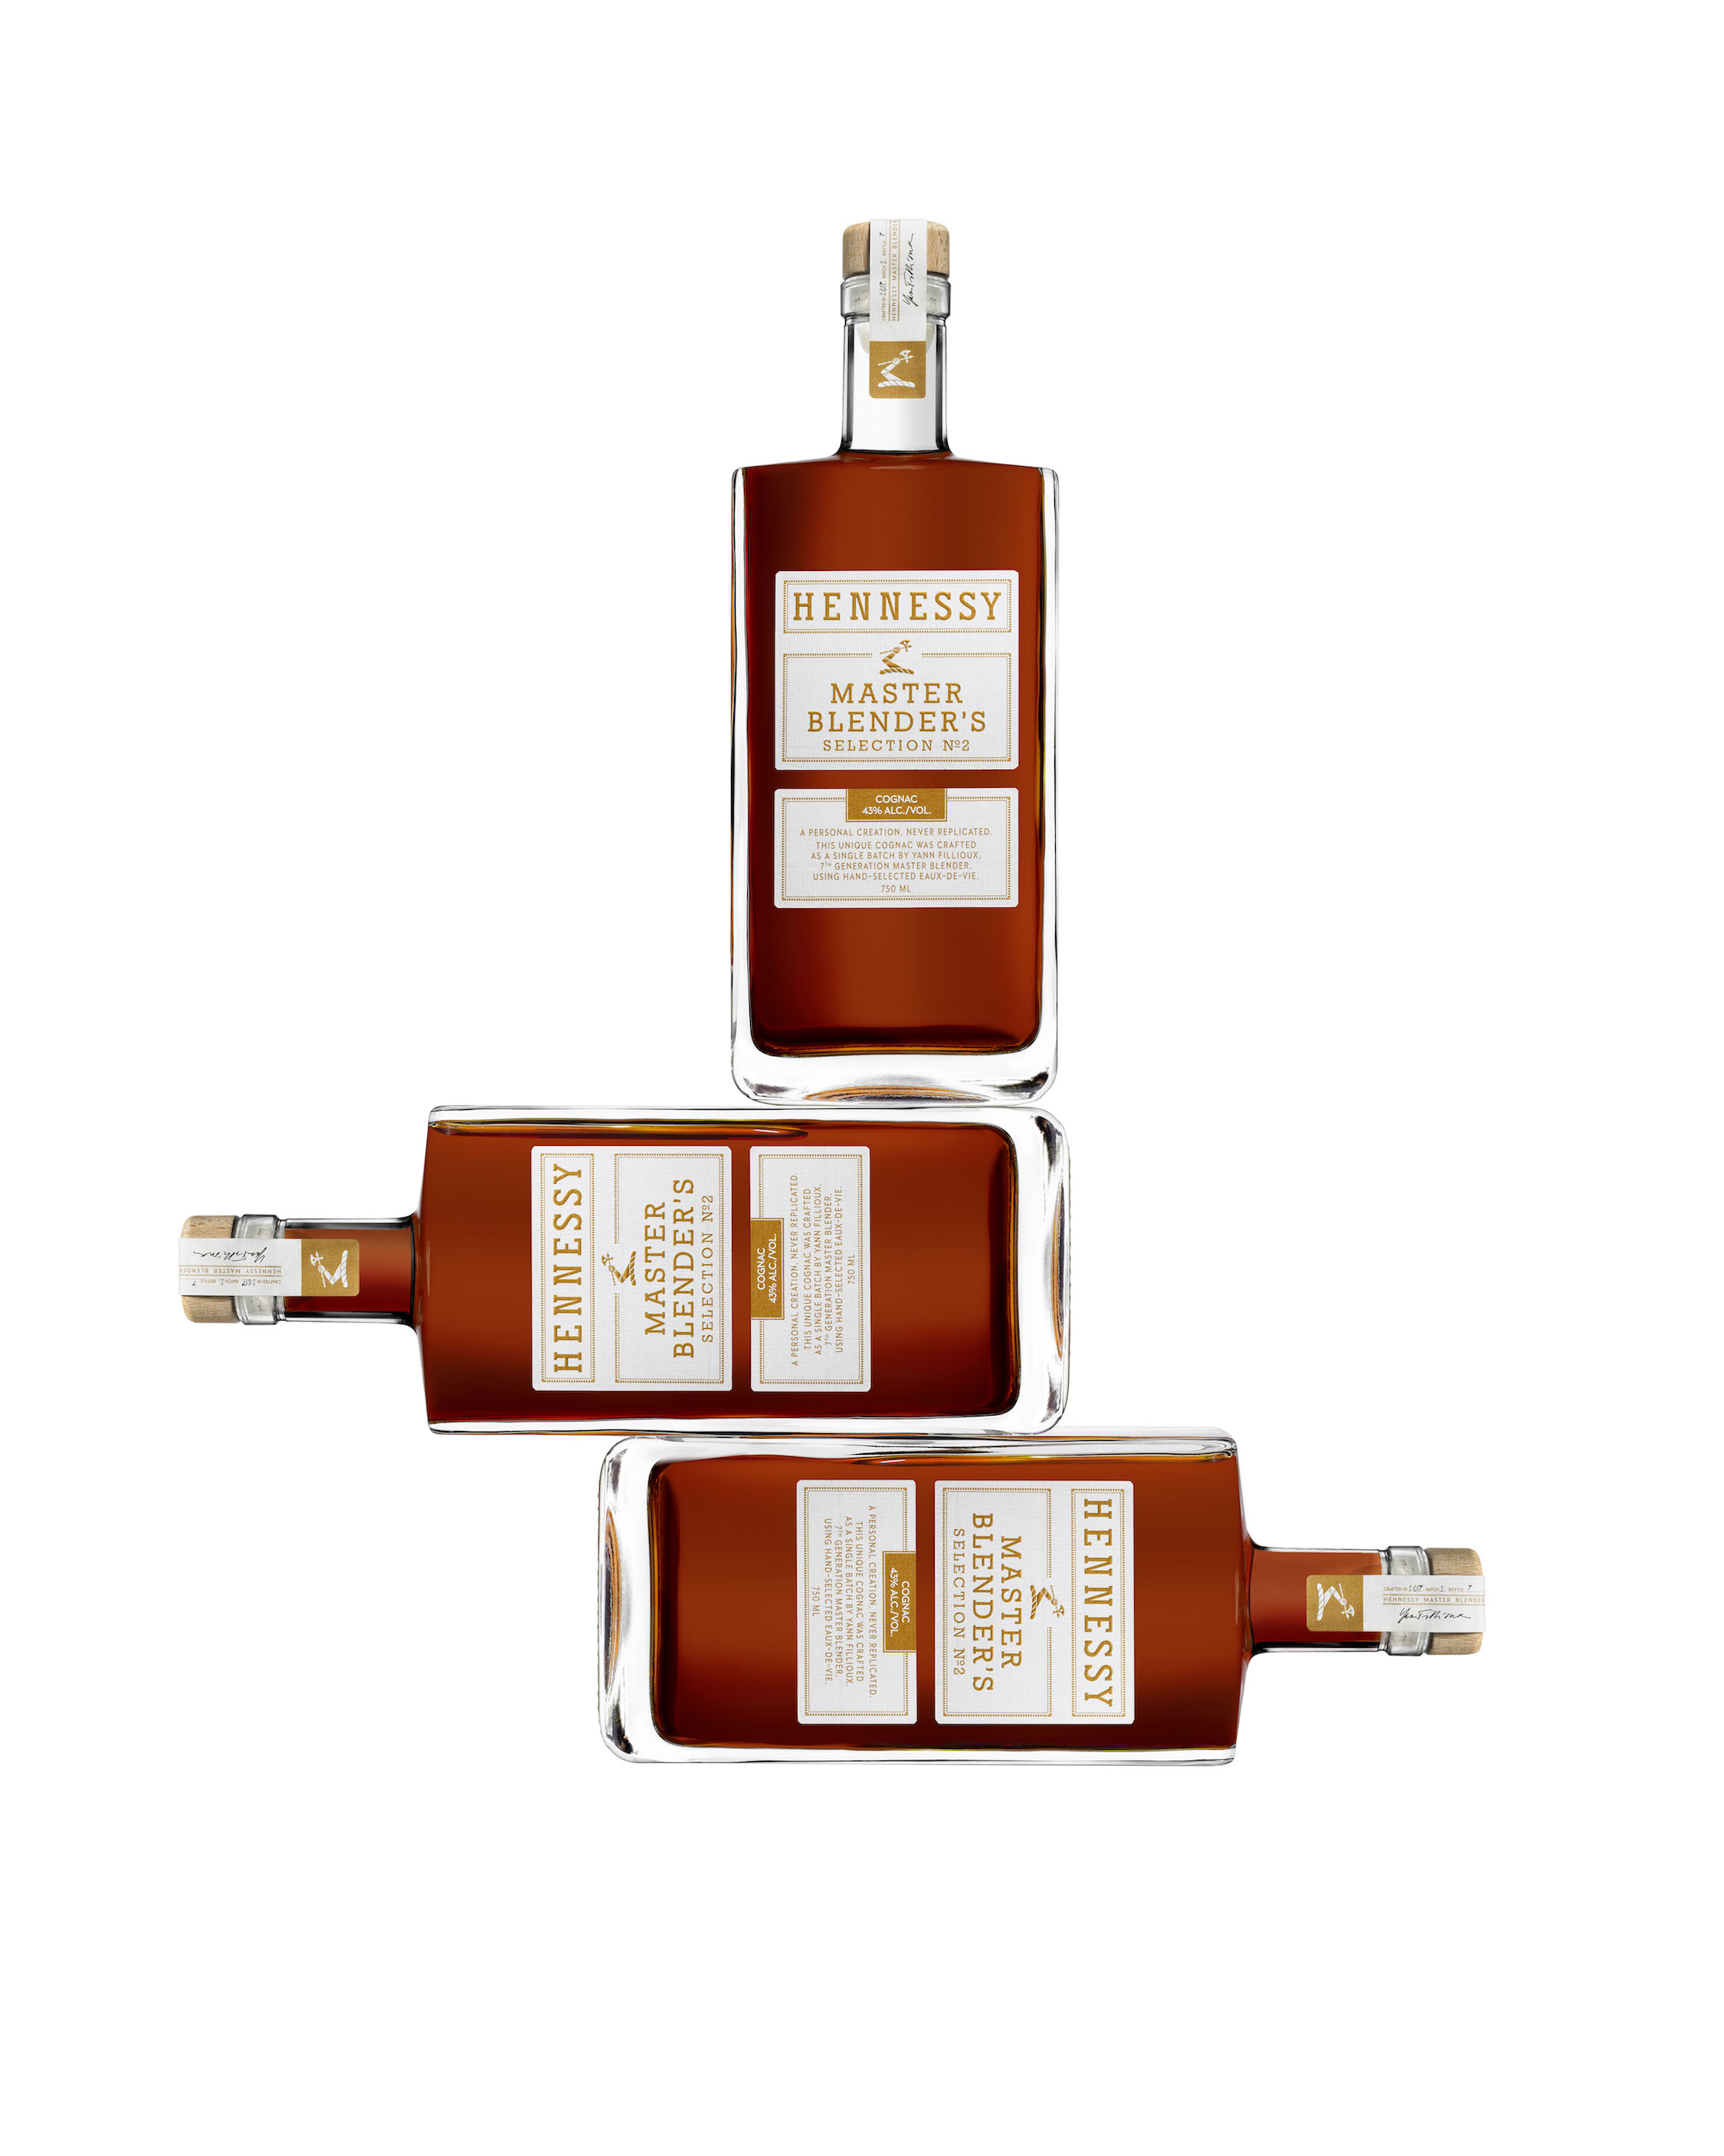 NEW: Hennessy Master Blender's Selection No. 2